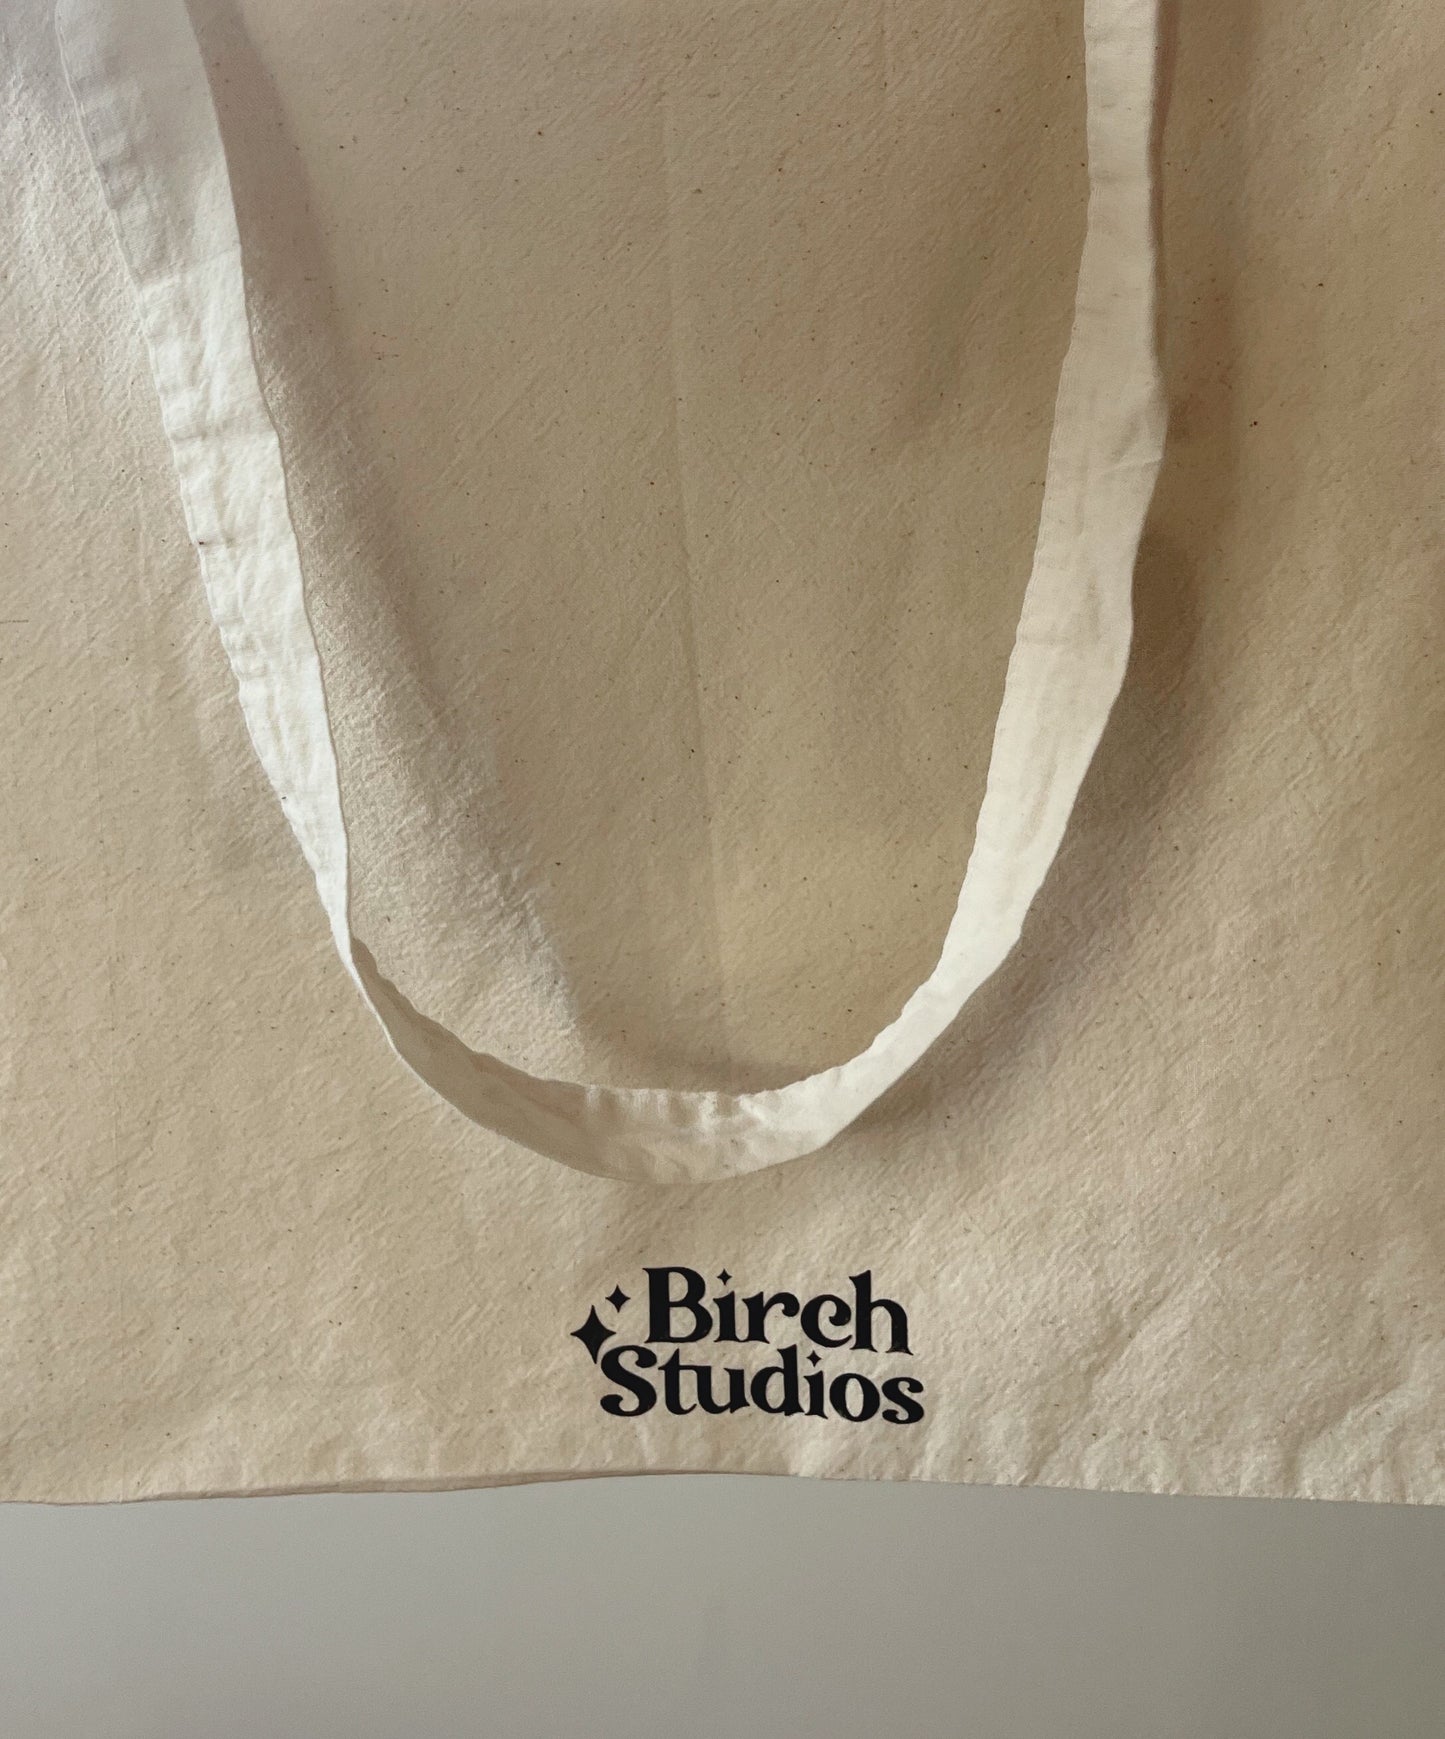 Disco Baubles Tote Bag | A Very Merry Birch Studios Christmas